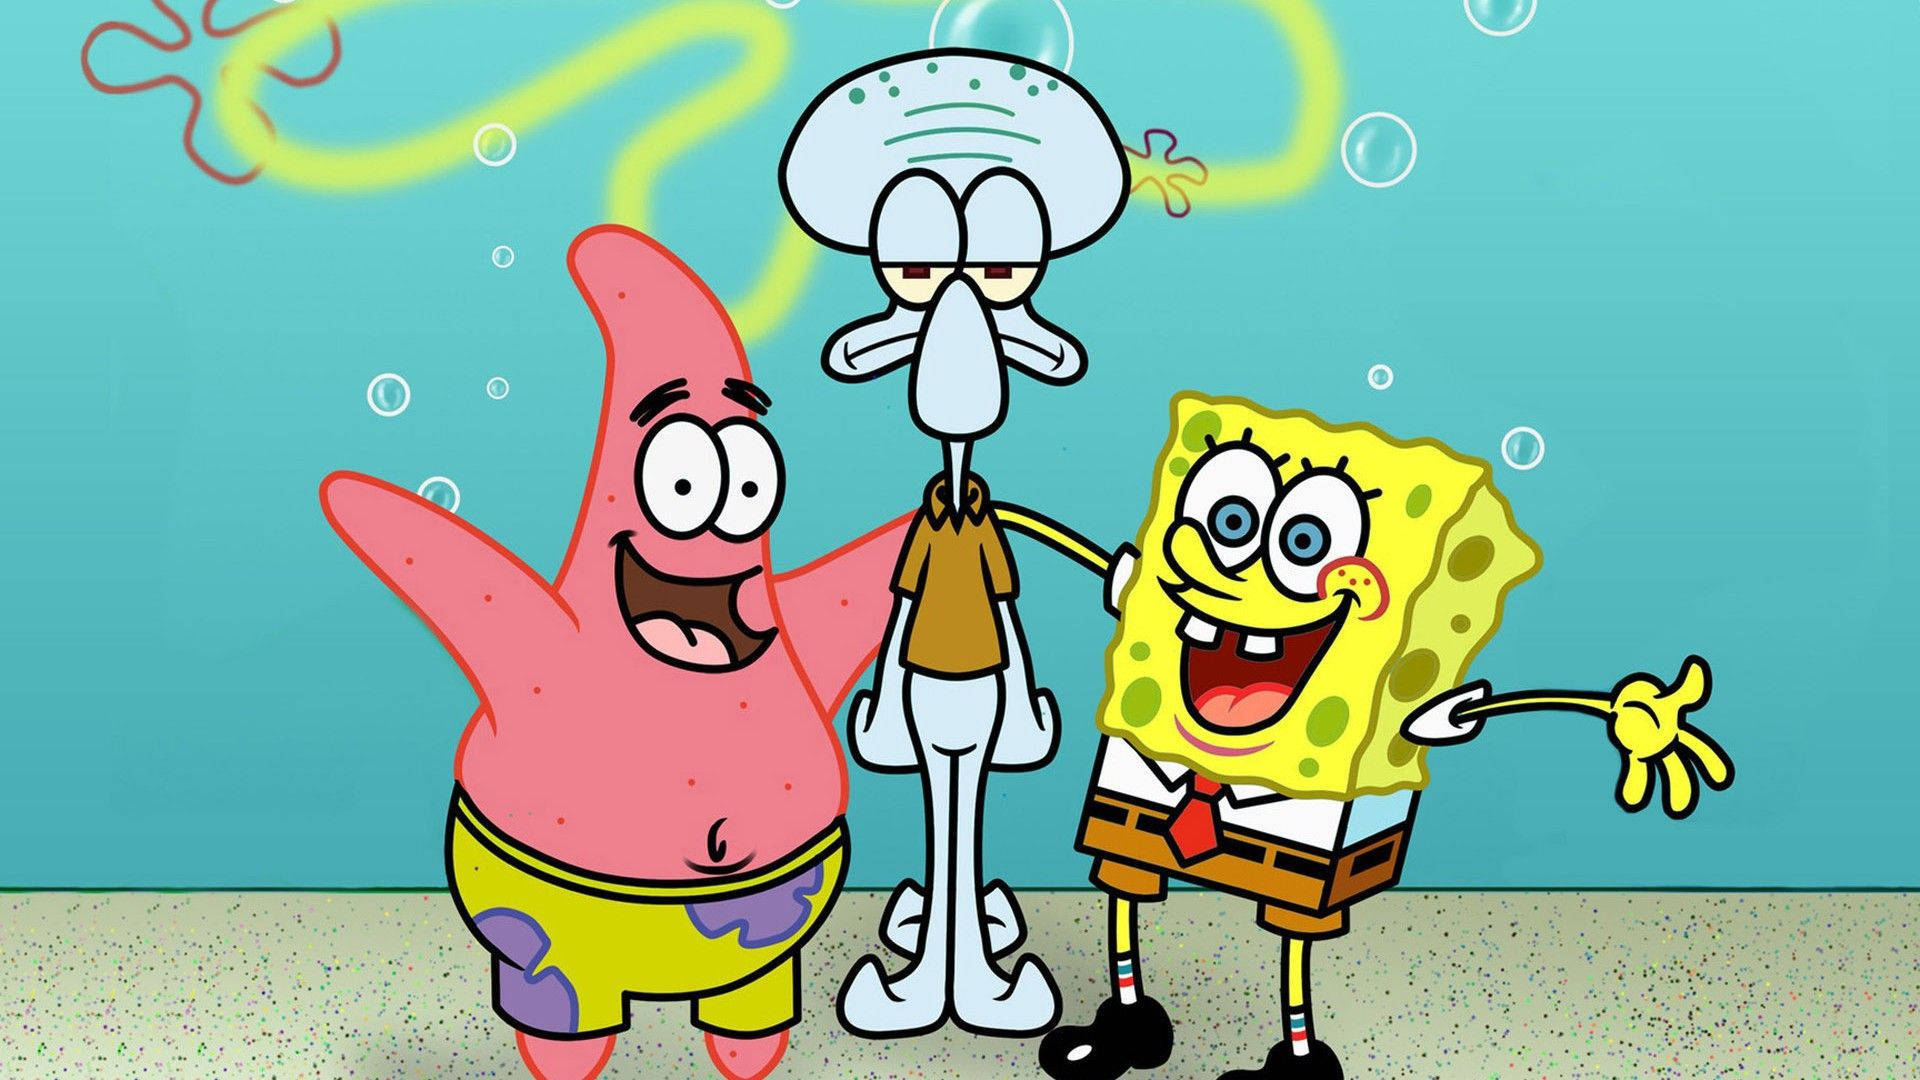 Cute Cartoon Spongebob, Patrick And Squidward